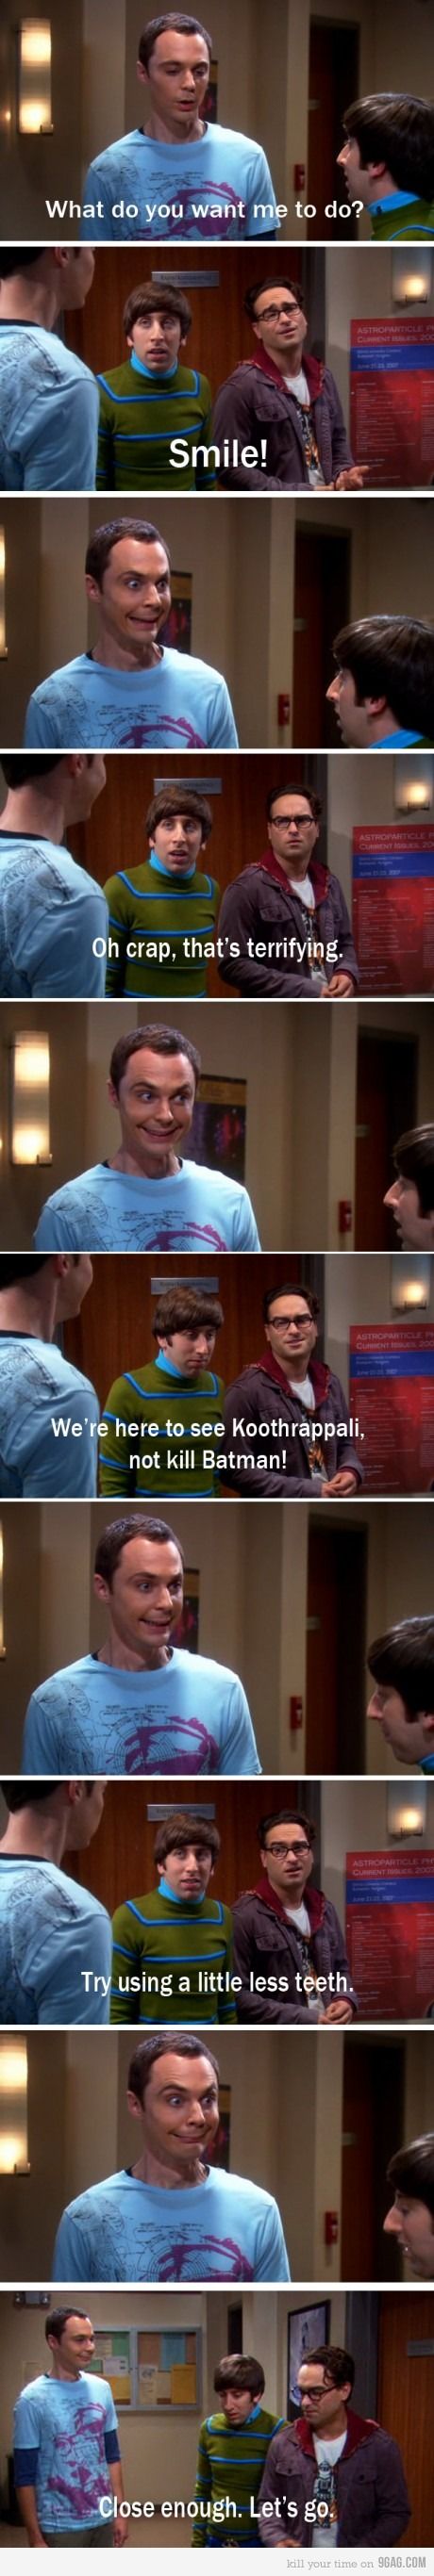 Smile, Sheldon!